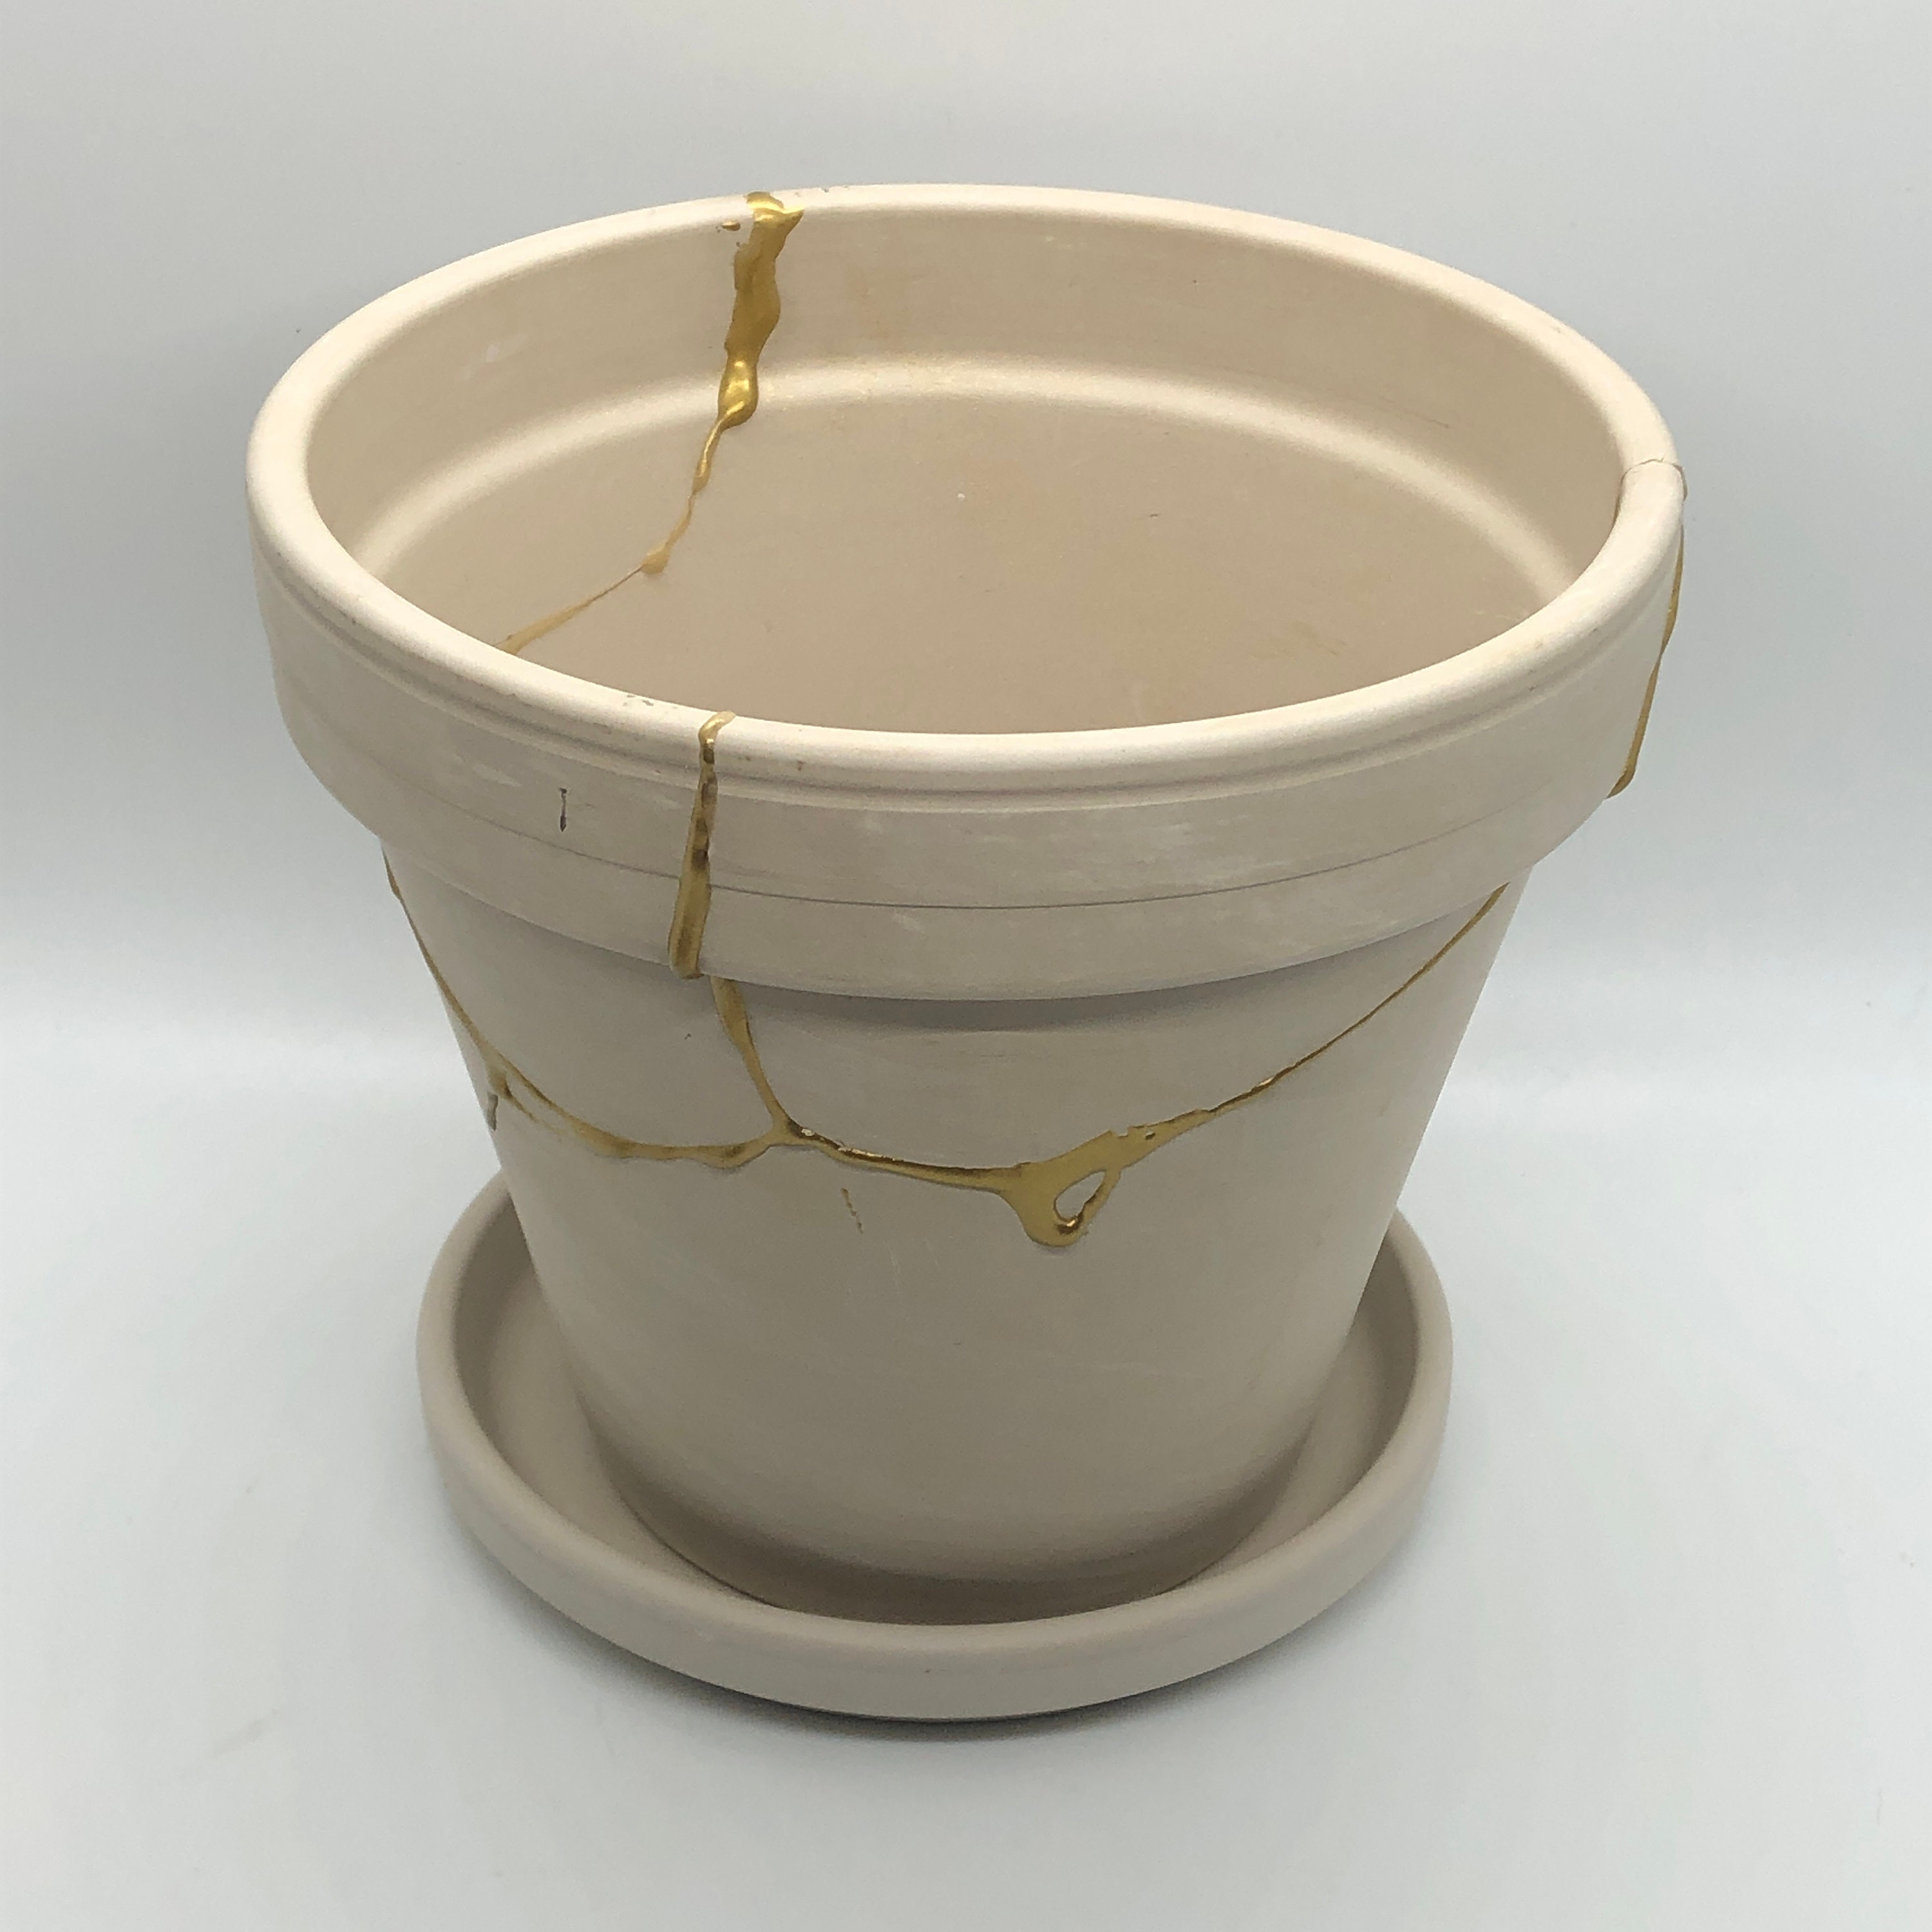 DIY Kintsugi - Broken bonsai pot repaired with gold colored powder